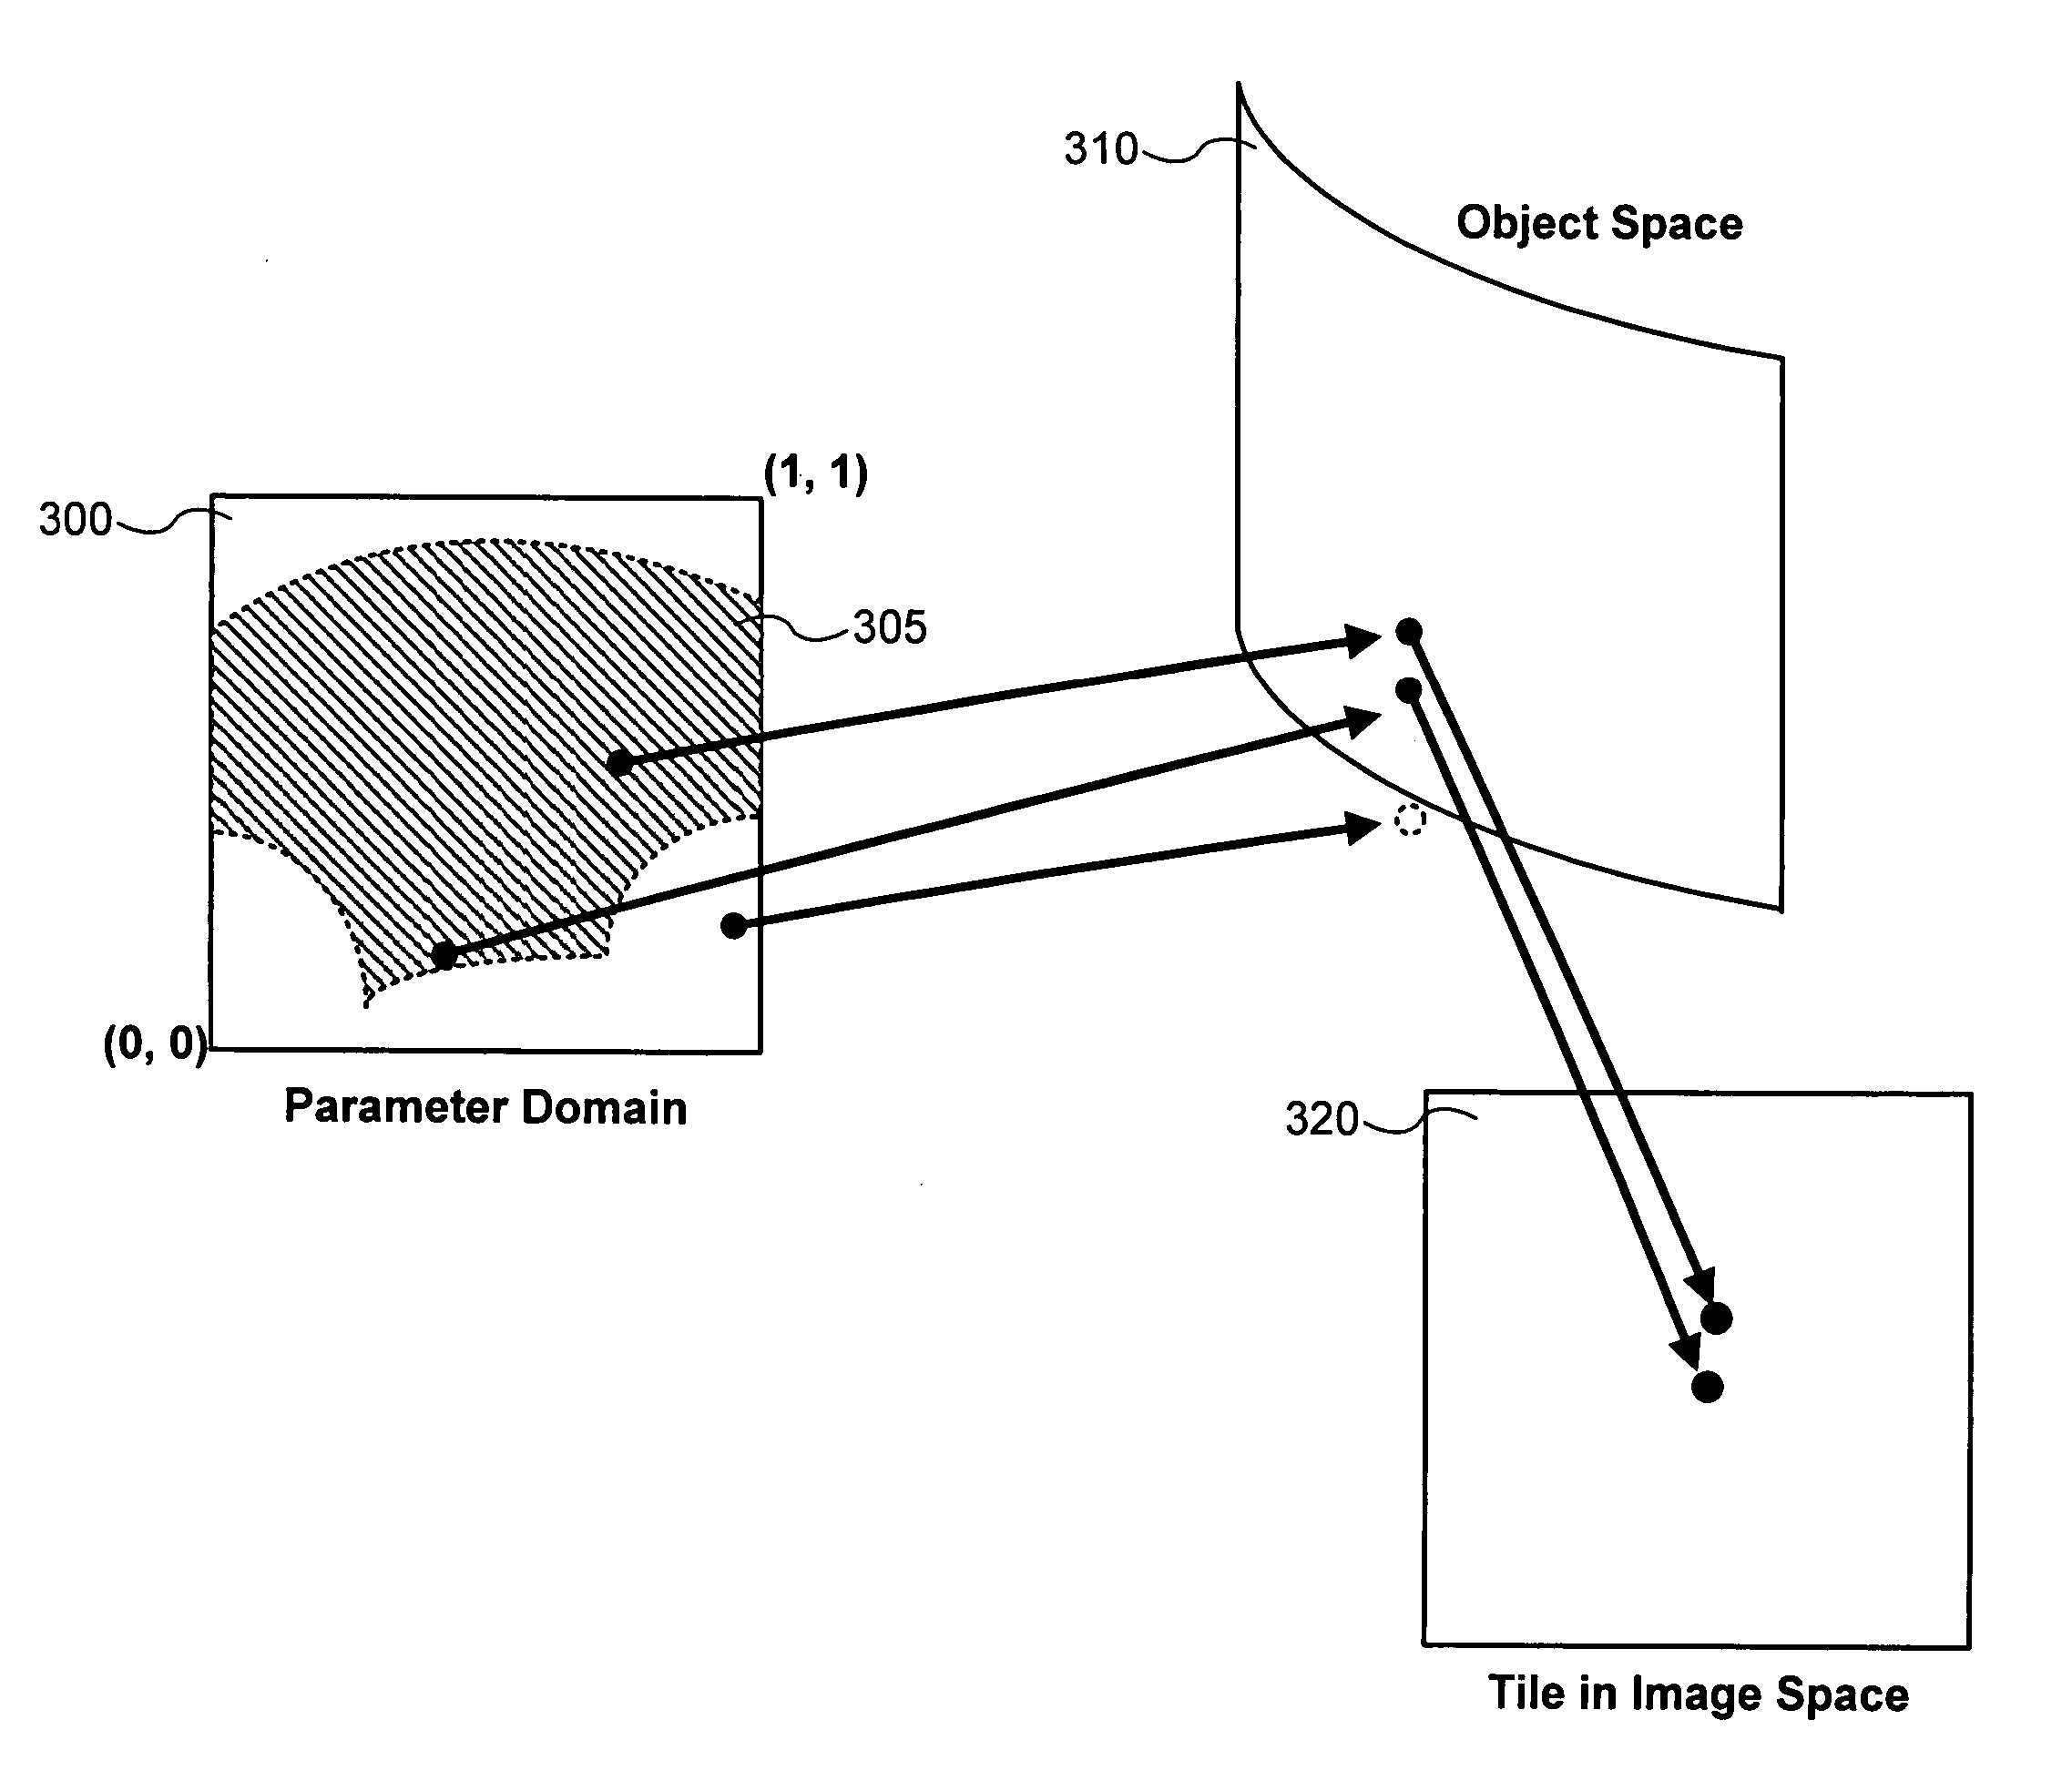 Procedural graphics architectures and techniques